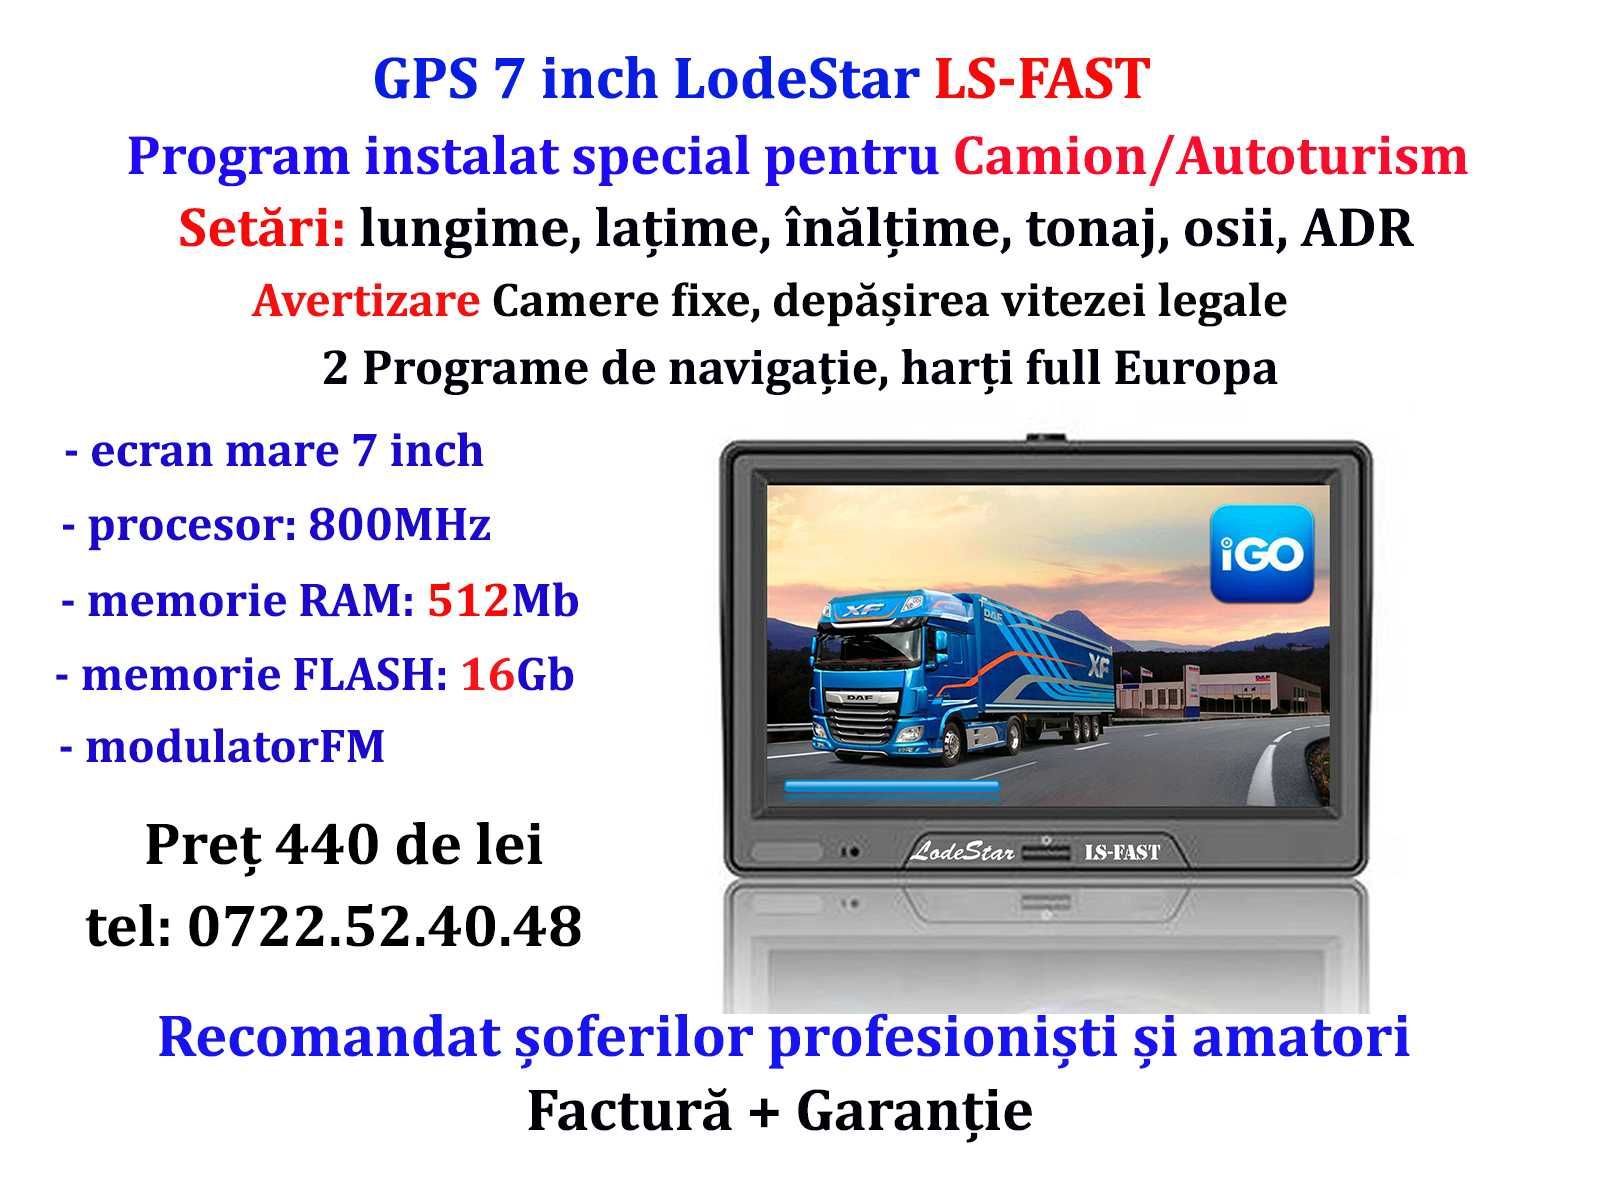 GPS 7 inch TIR/Camion 512Mb/16Gb iGO Primo Europa  avertiz camere fixe